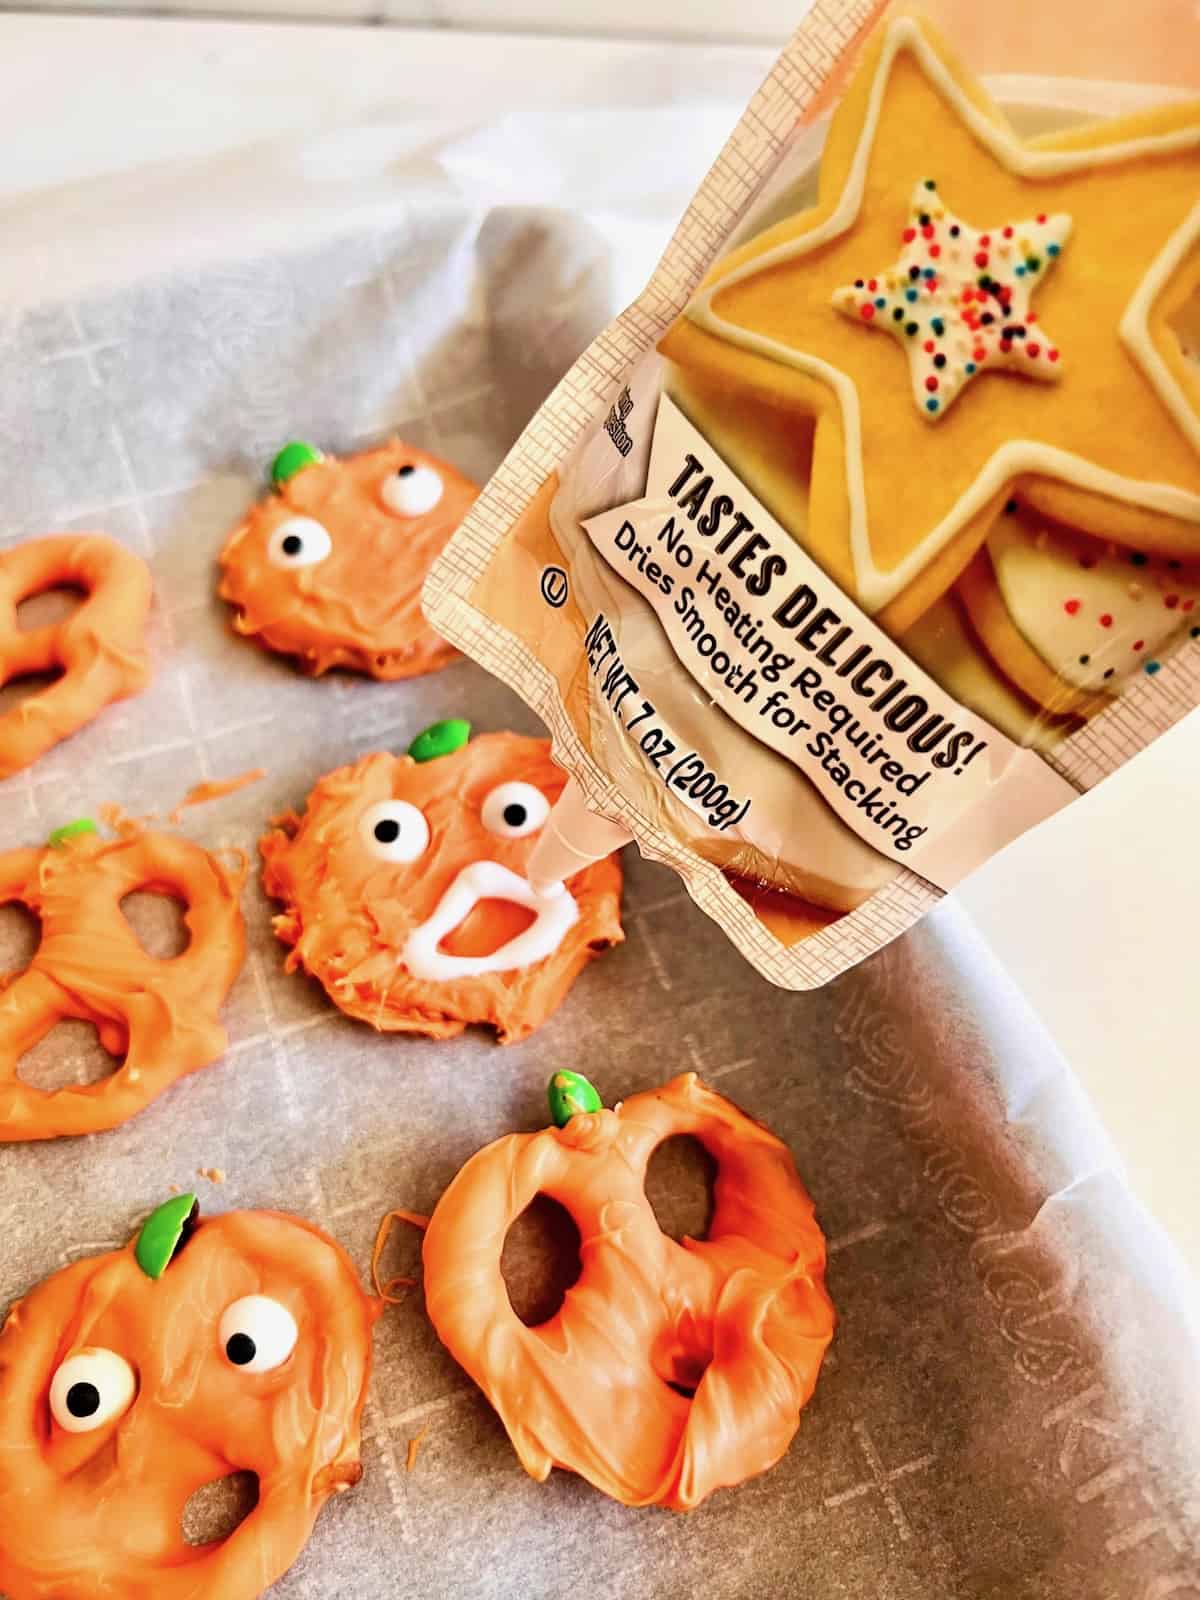 Using Cookie Icing to add Jack o Lantern faces onto orange pumpkin pretzels.